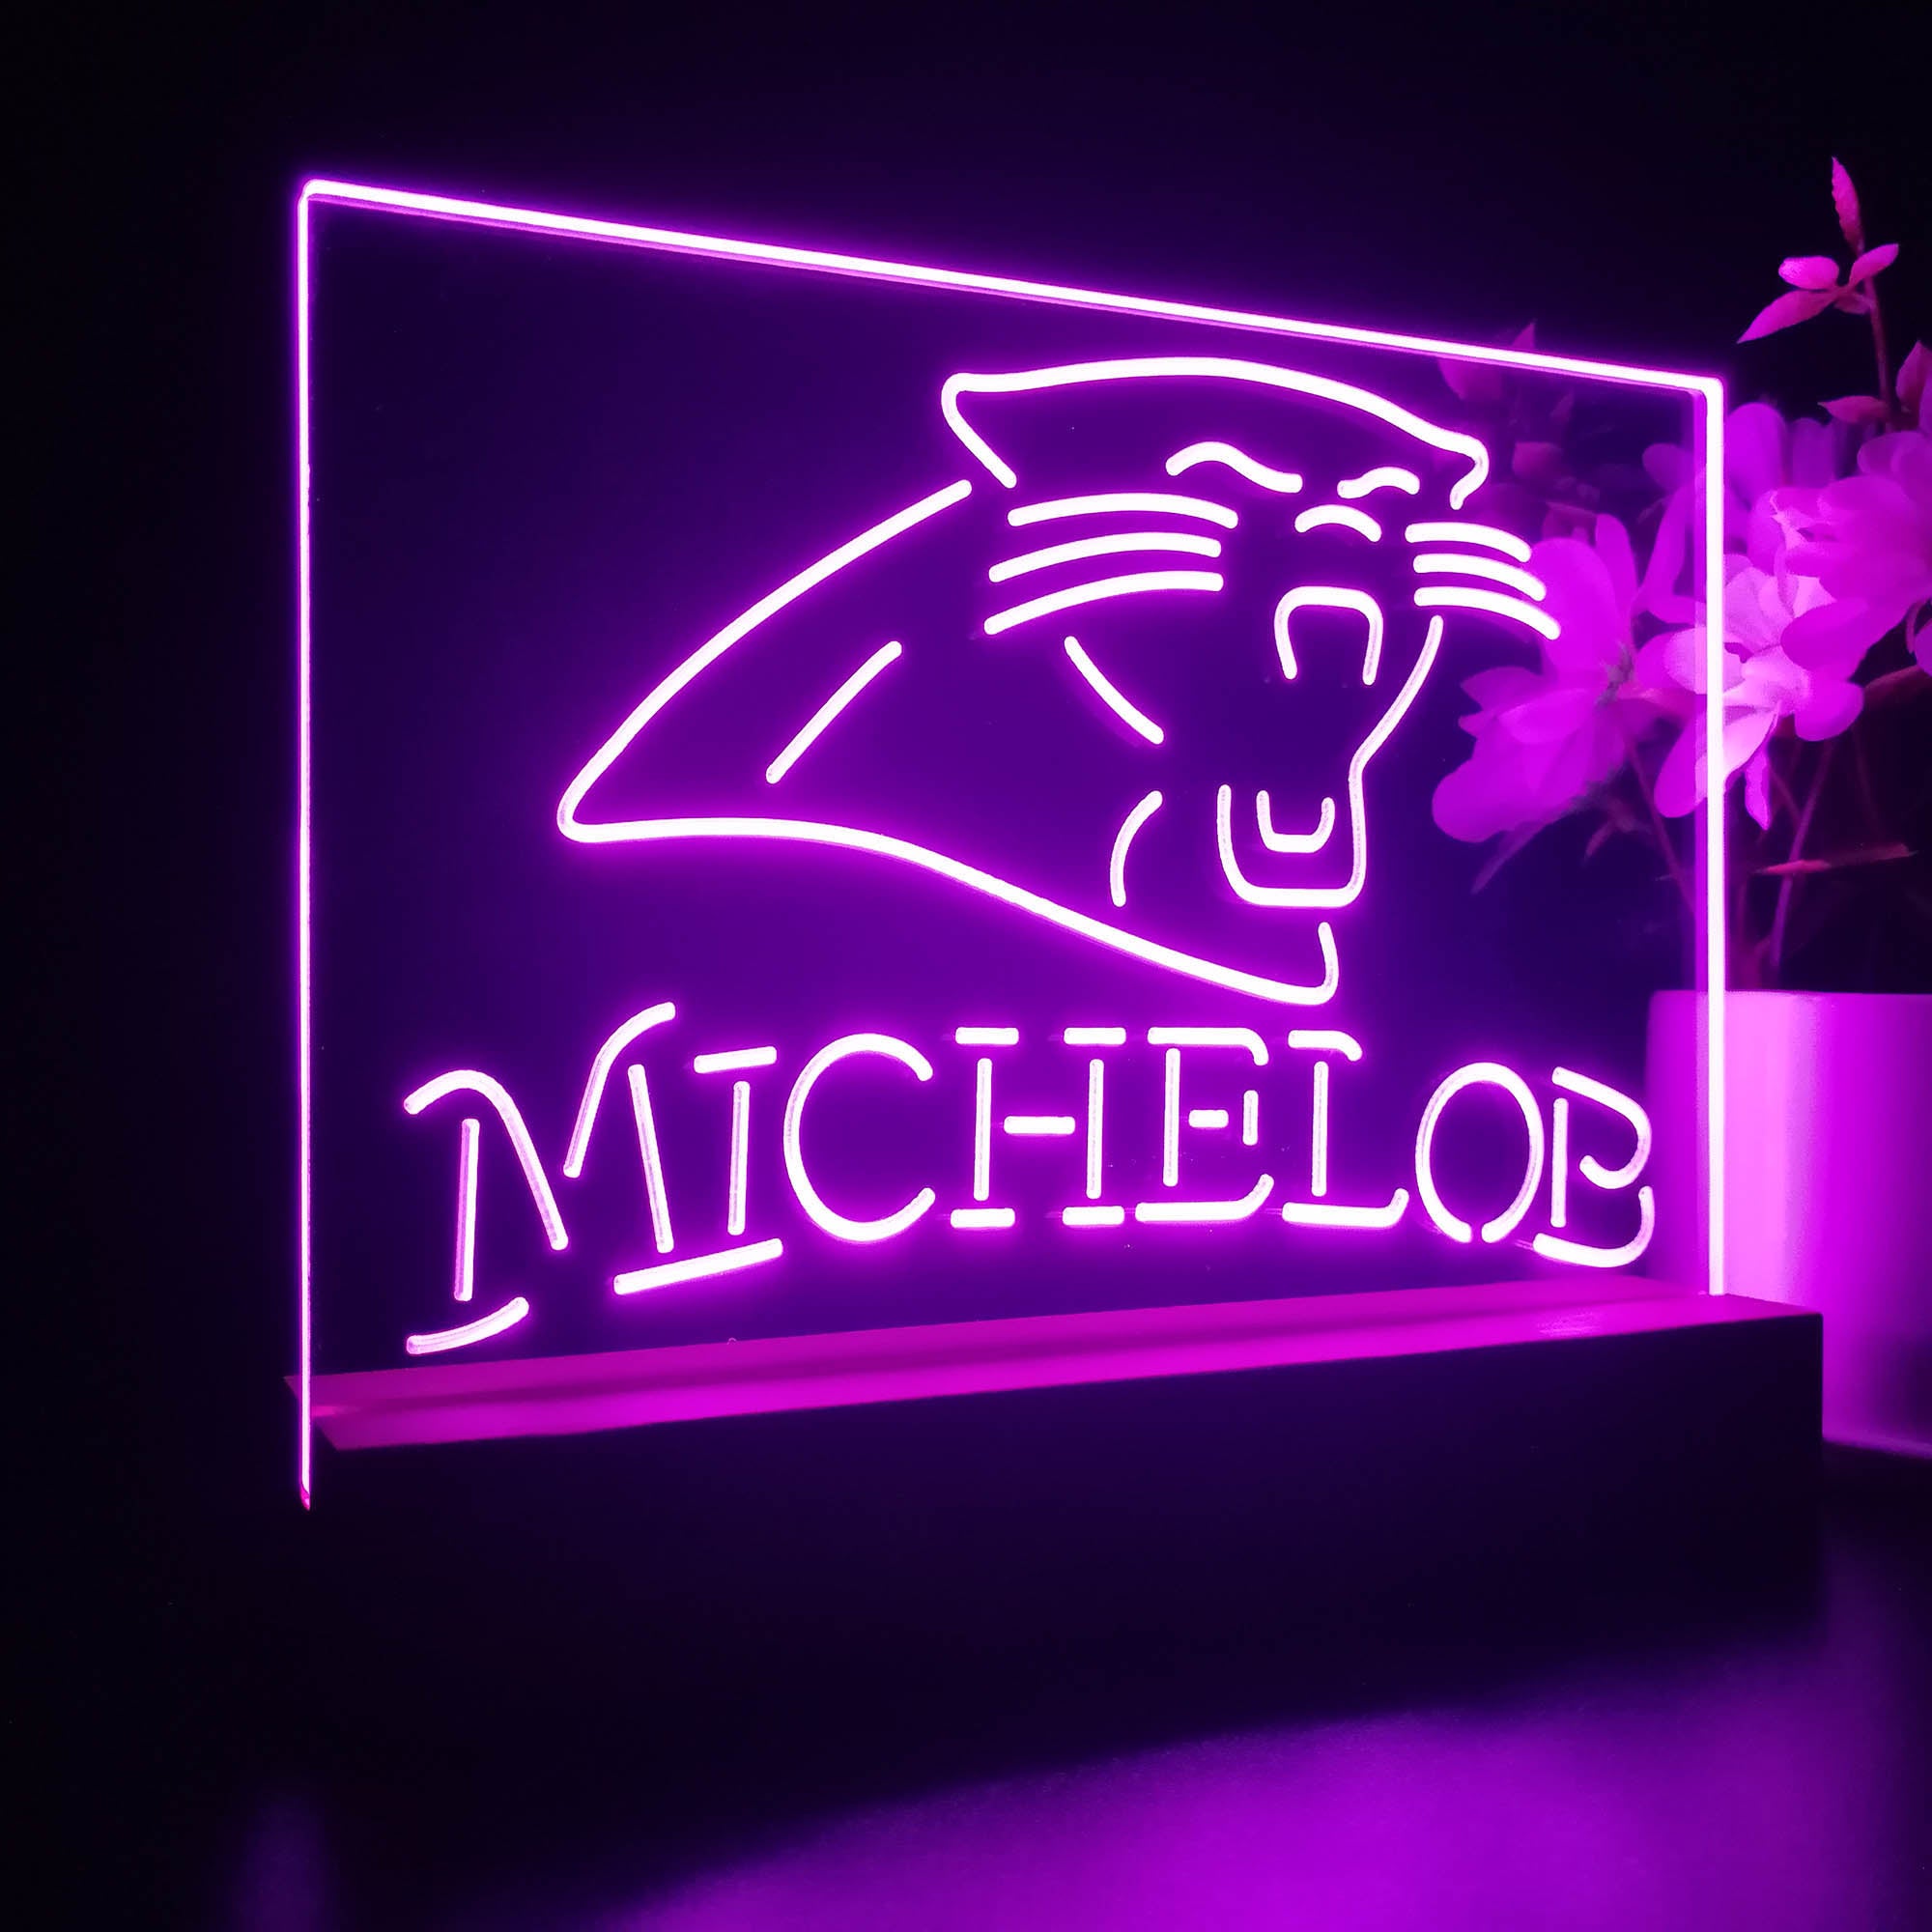 Michelob Bar Carolina Panthers Night Light LED Sign